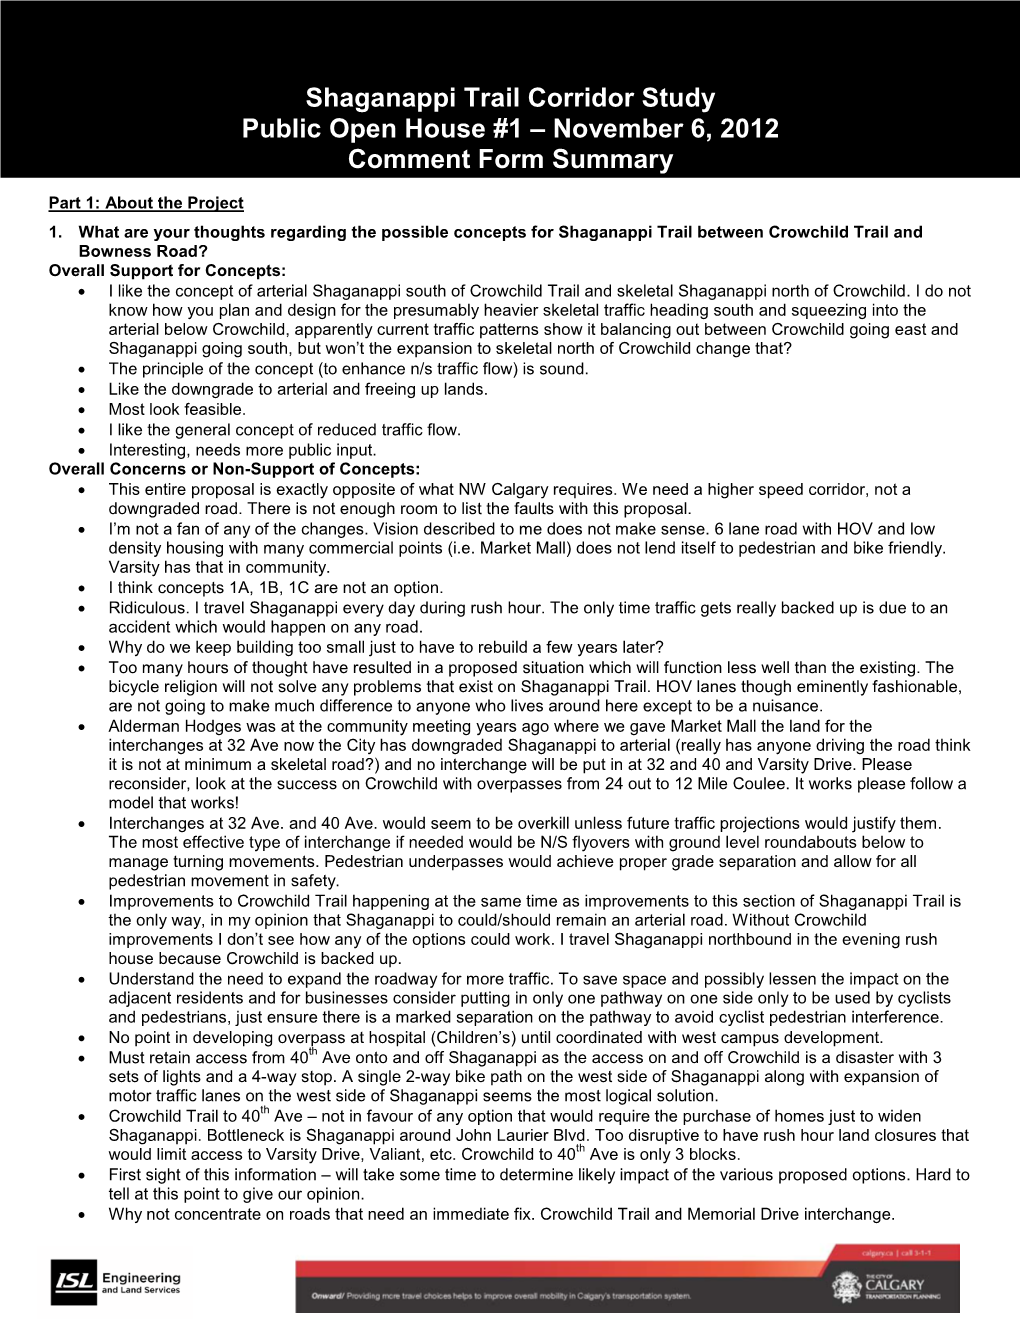 Shaganappi Trail Corridor Study Public Open House #1 – November 6, 2012 Comment Form Summary